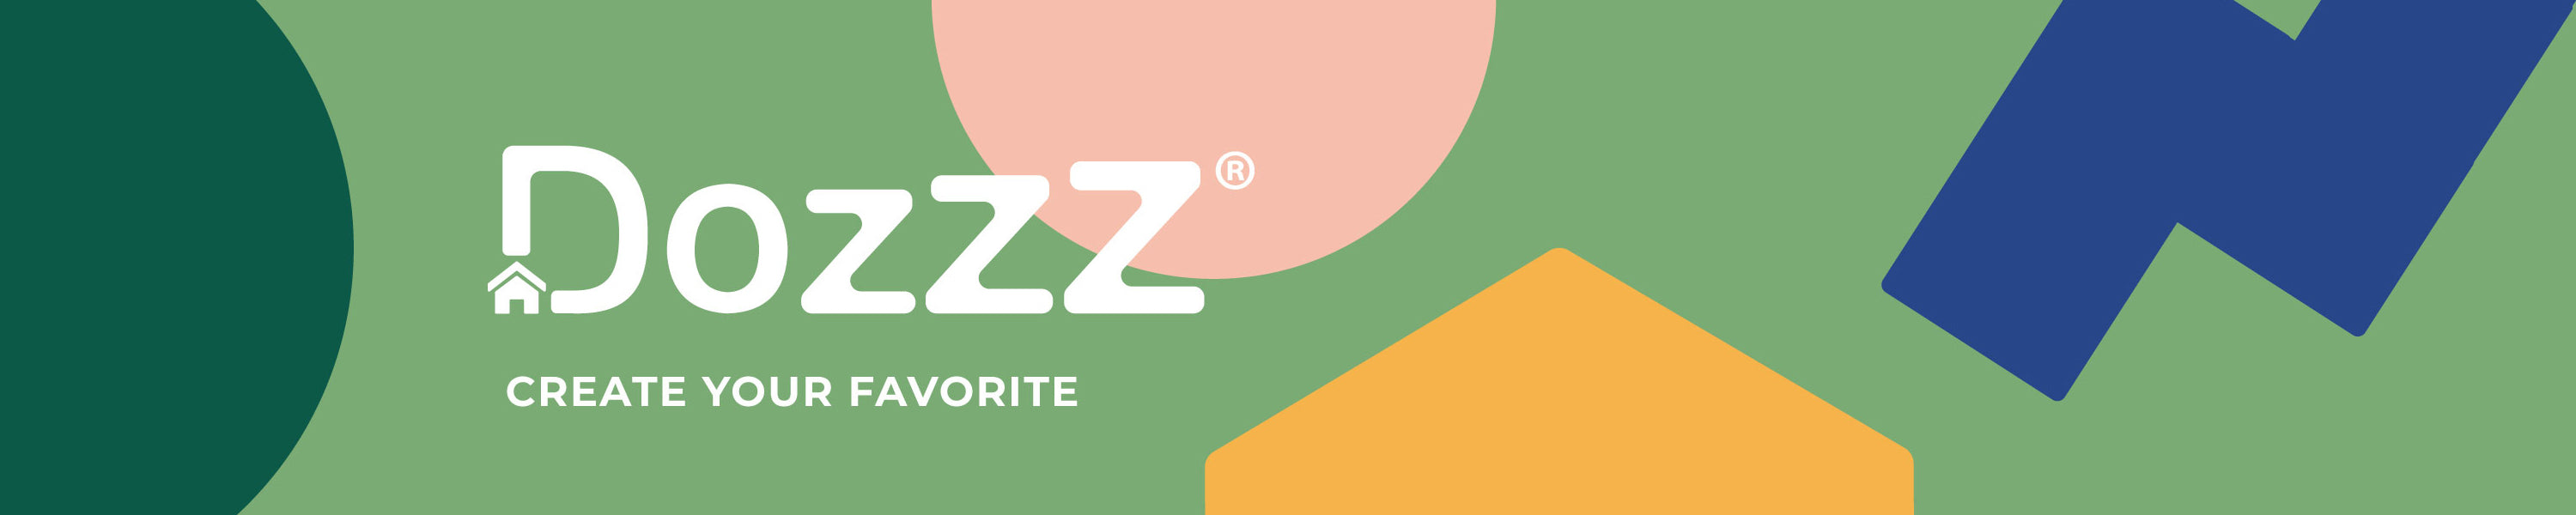 Dozzz Brand Story Heading